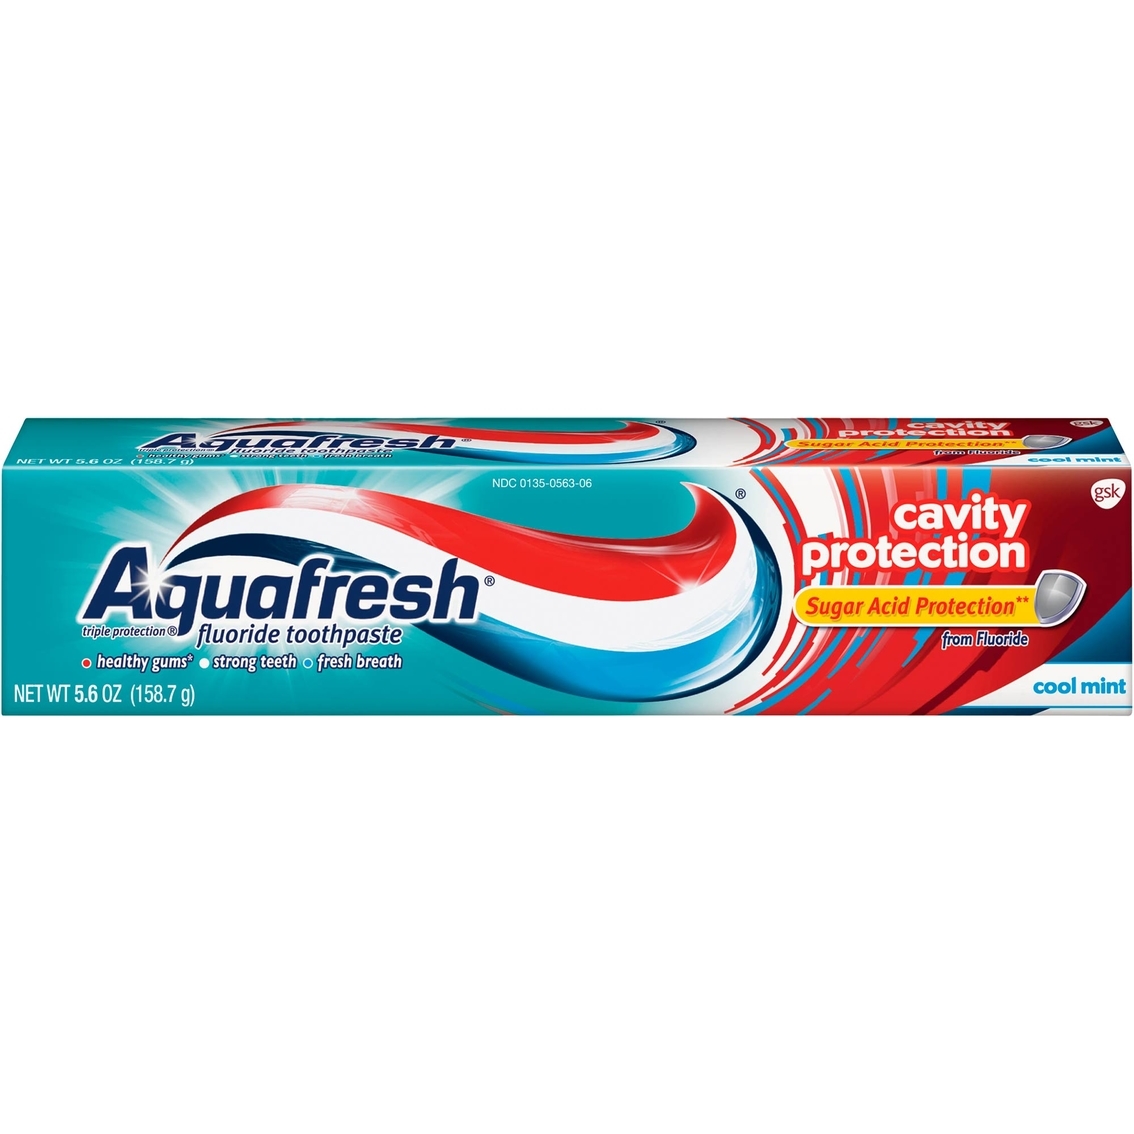 Aquafresh Cavity Protection 159G